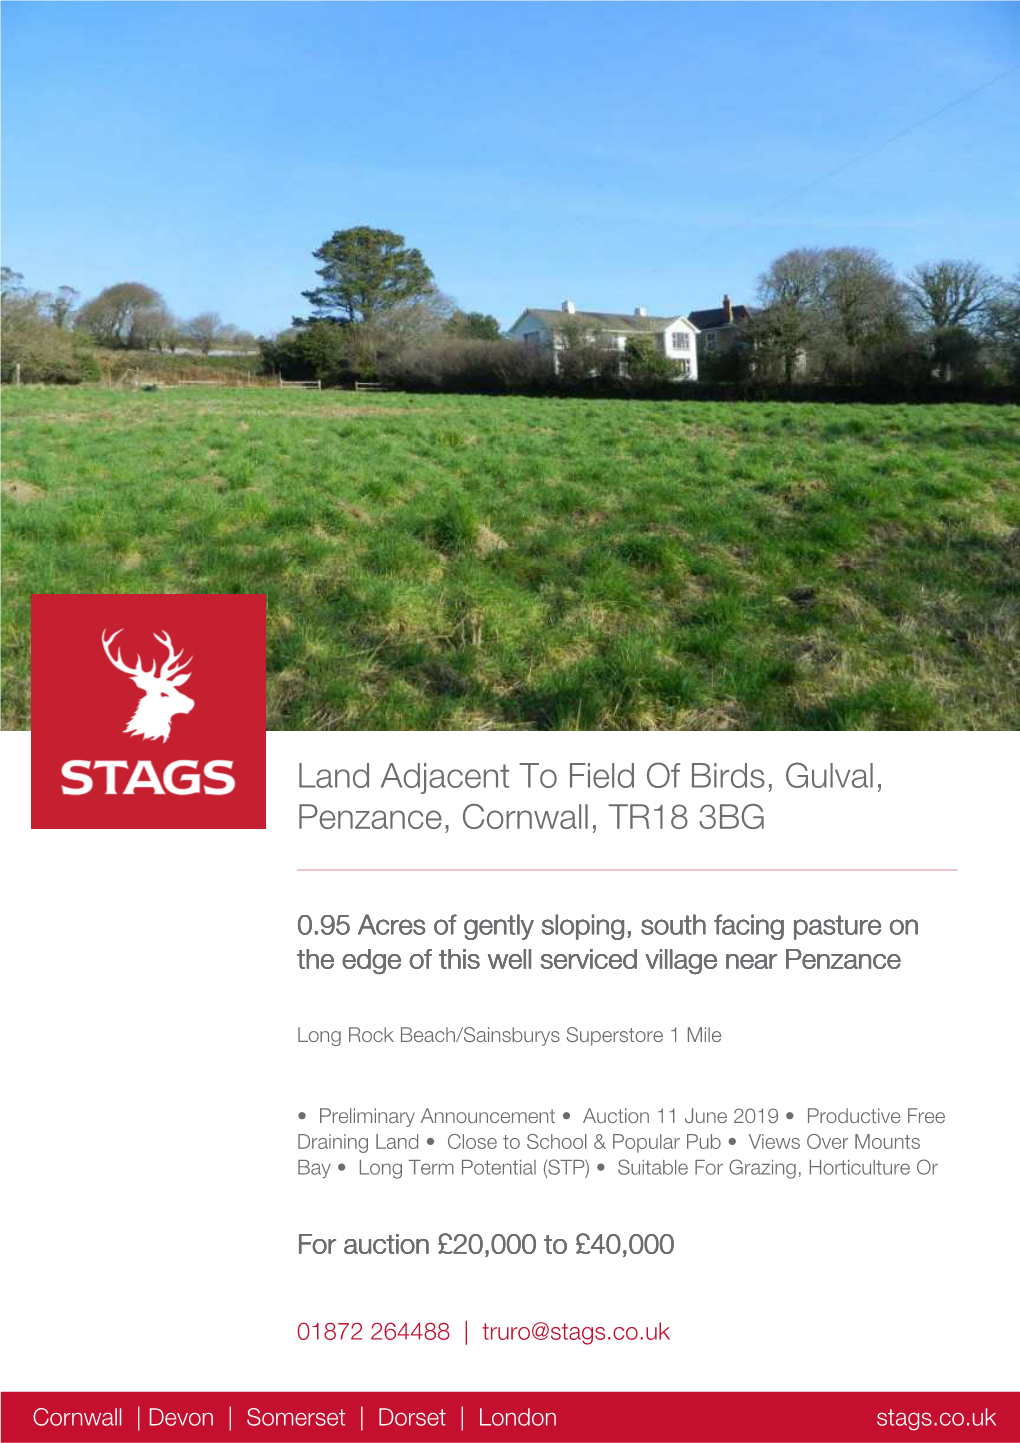 Land Adjacent to Field of Birds, Gulval, Penzance, Cornwall, TR18 3BG